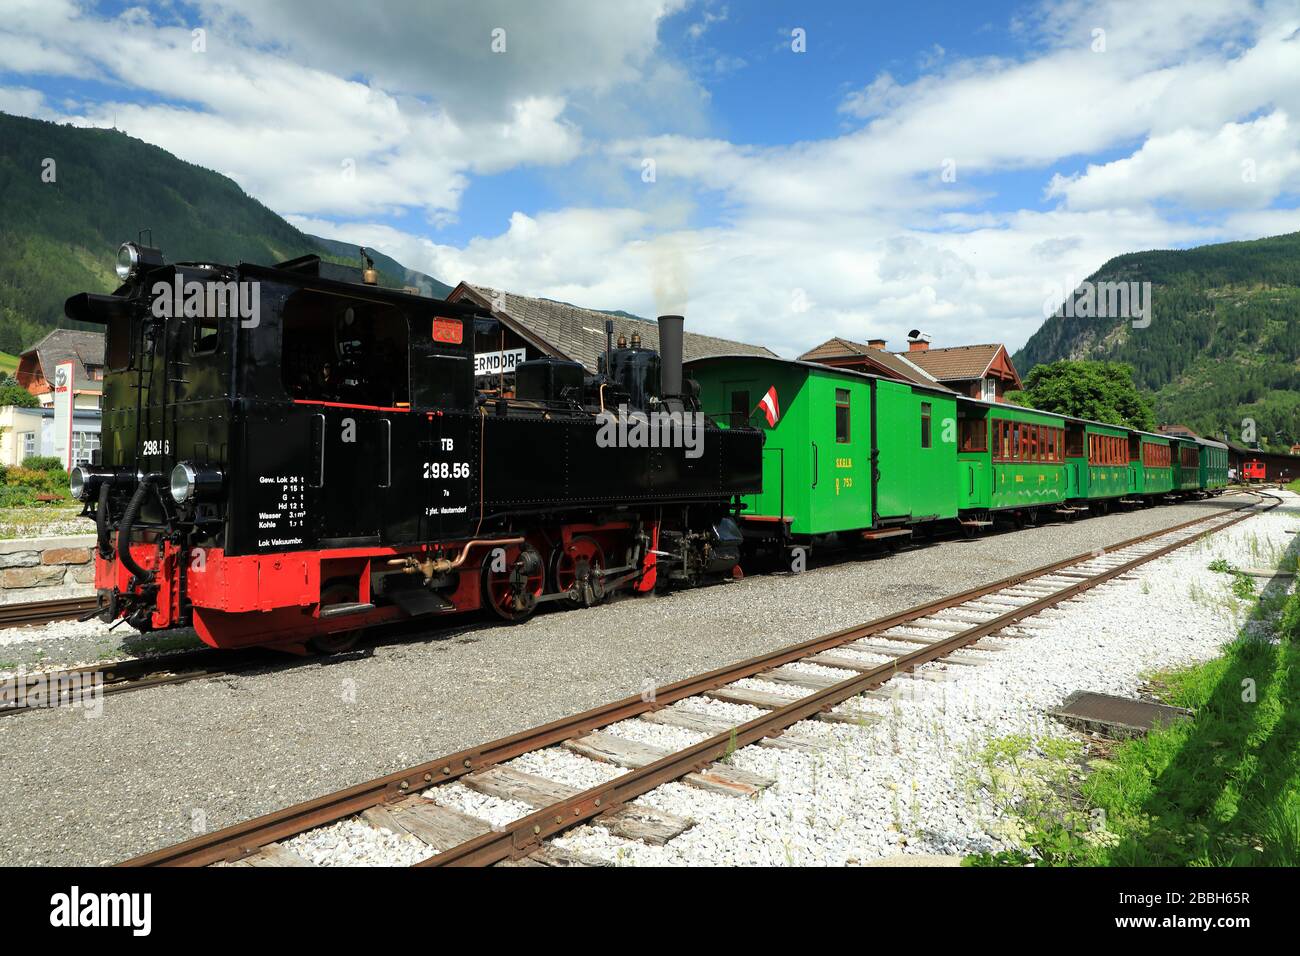 Taurachbahn with steam train in action Stock Photo